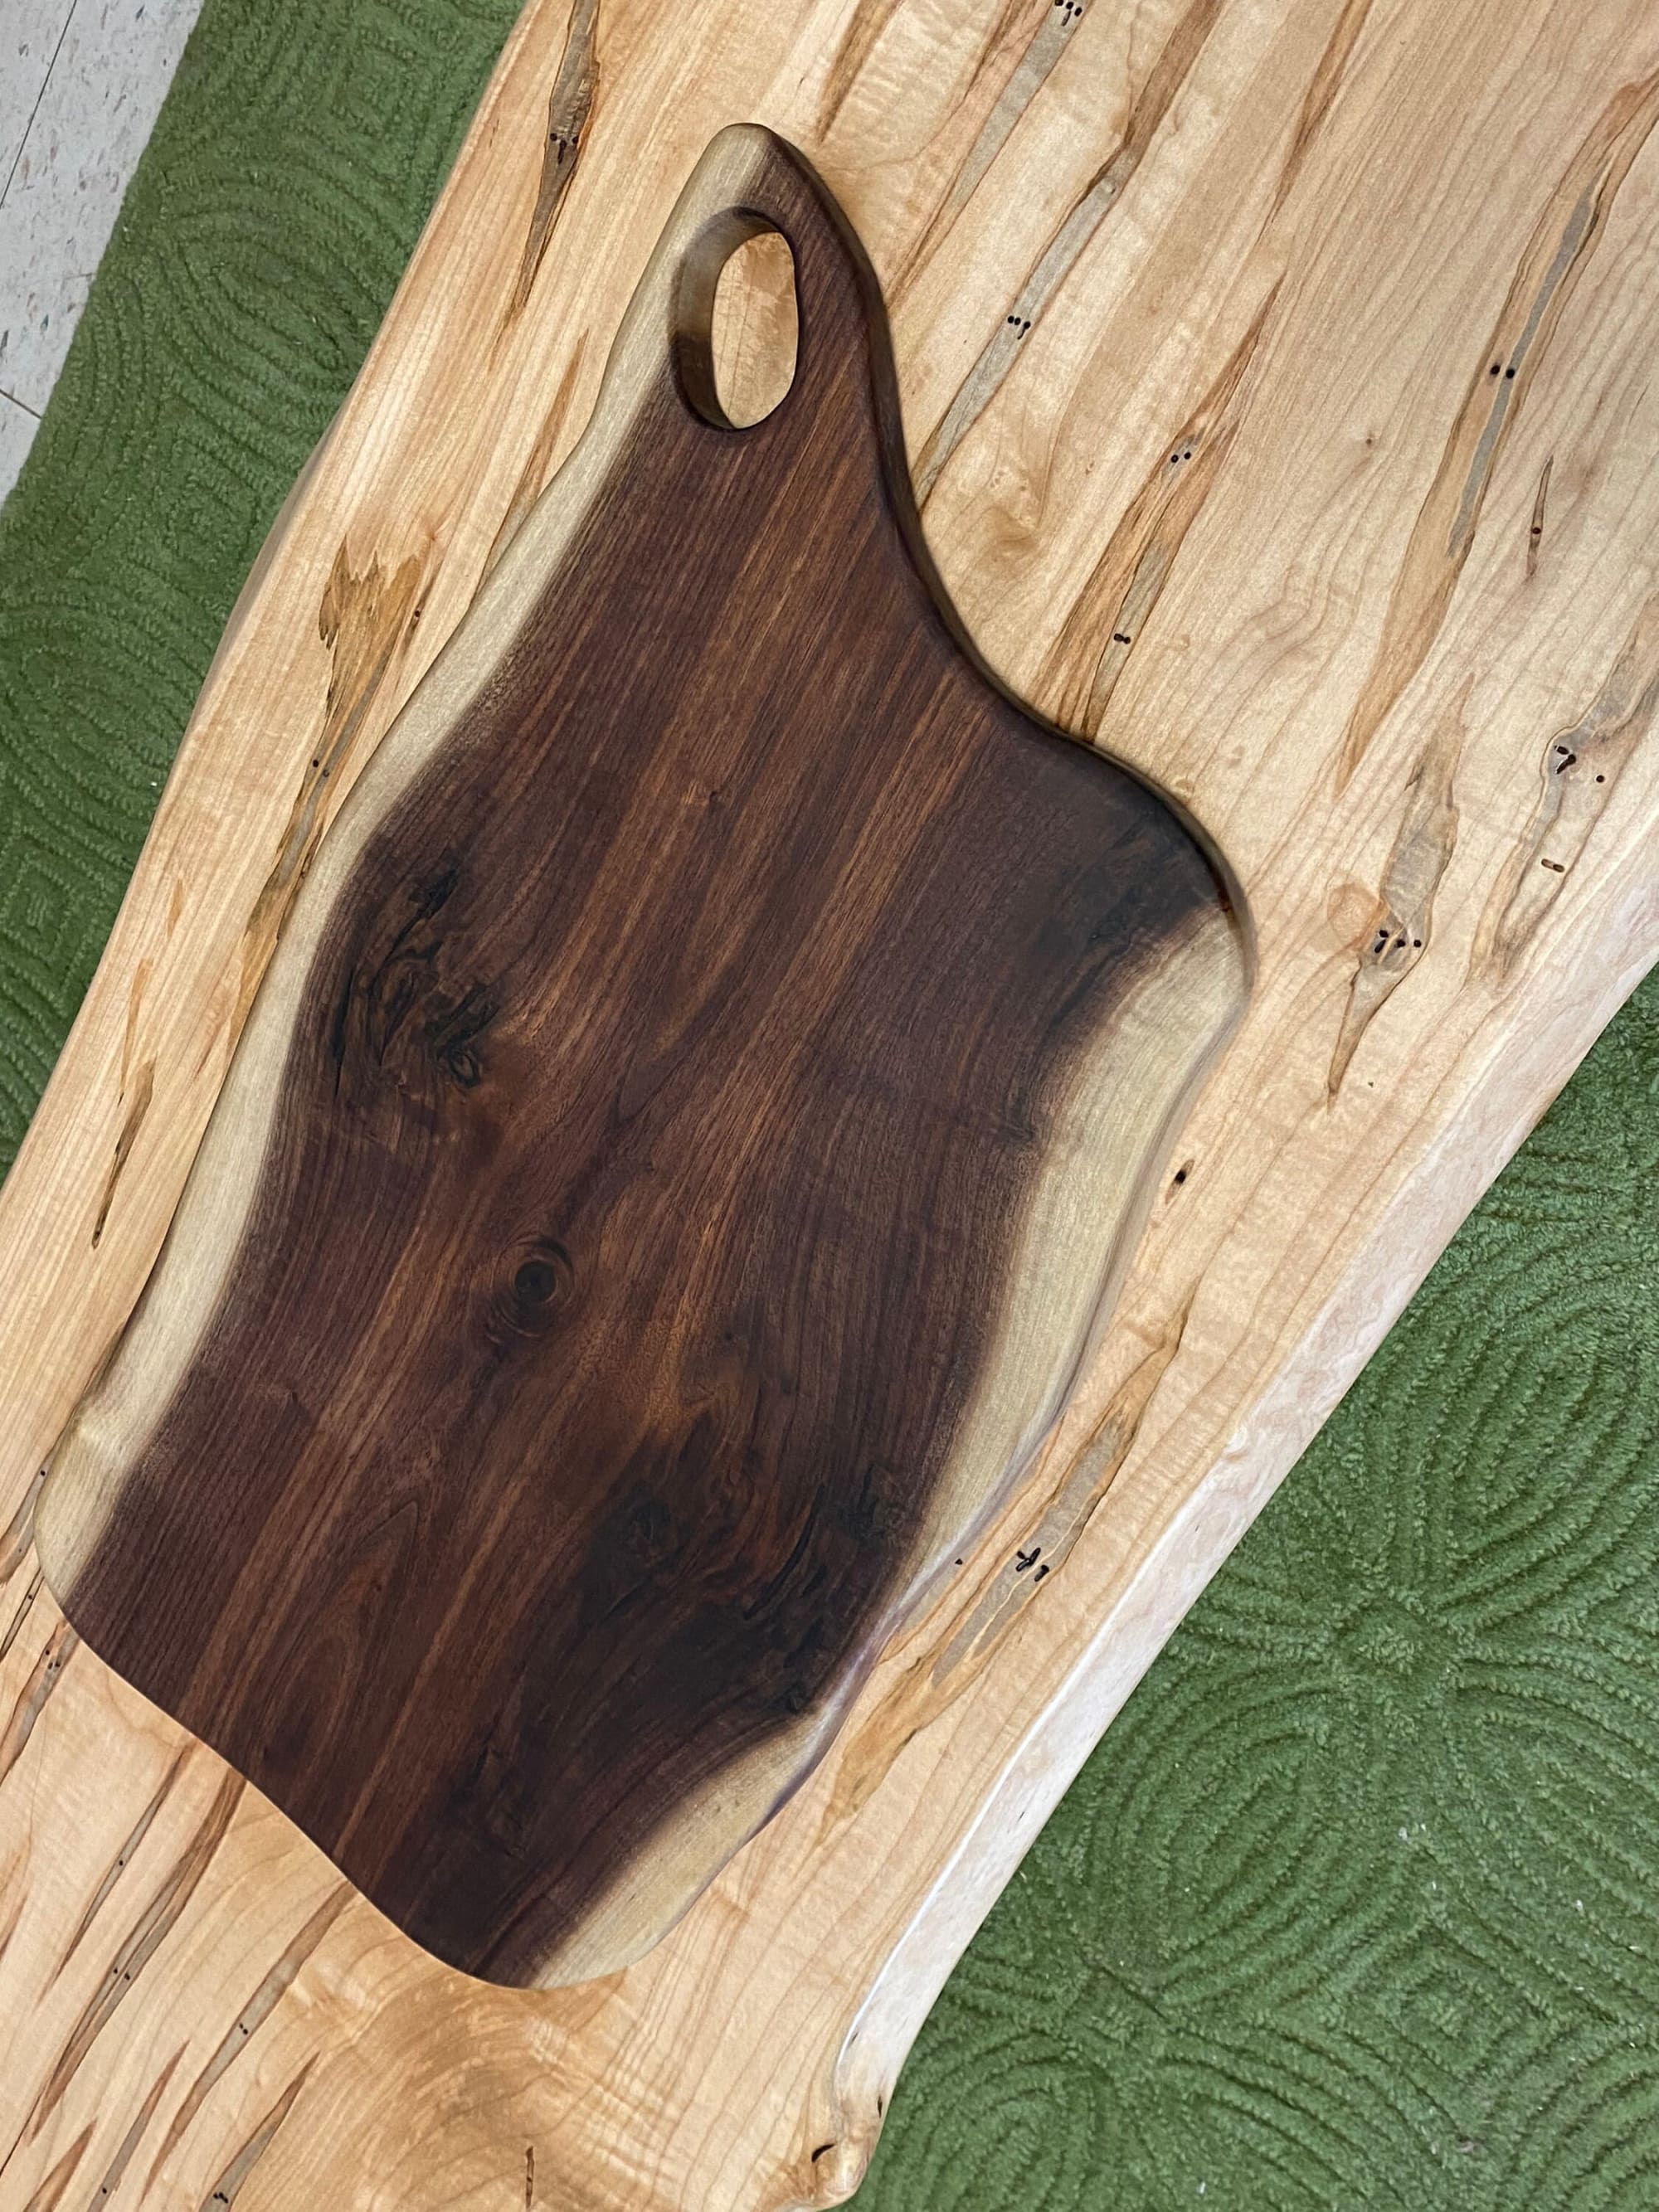 Live edge walnut cutting board, 12 x 24 wood chopping board